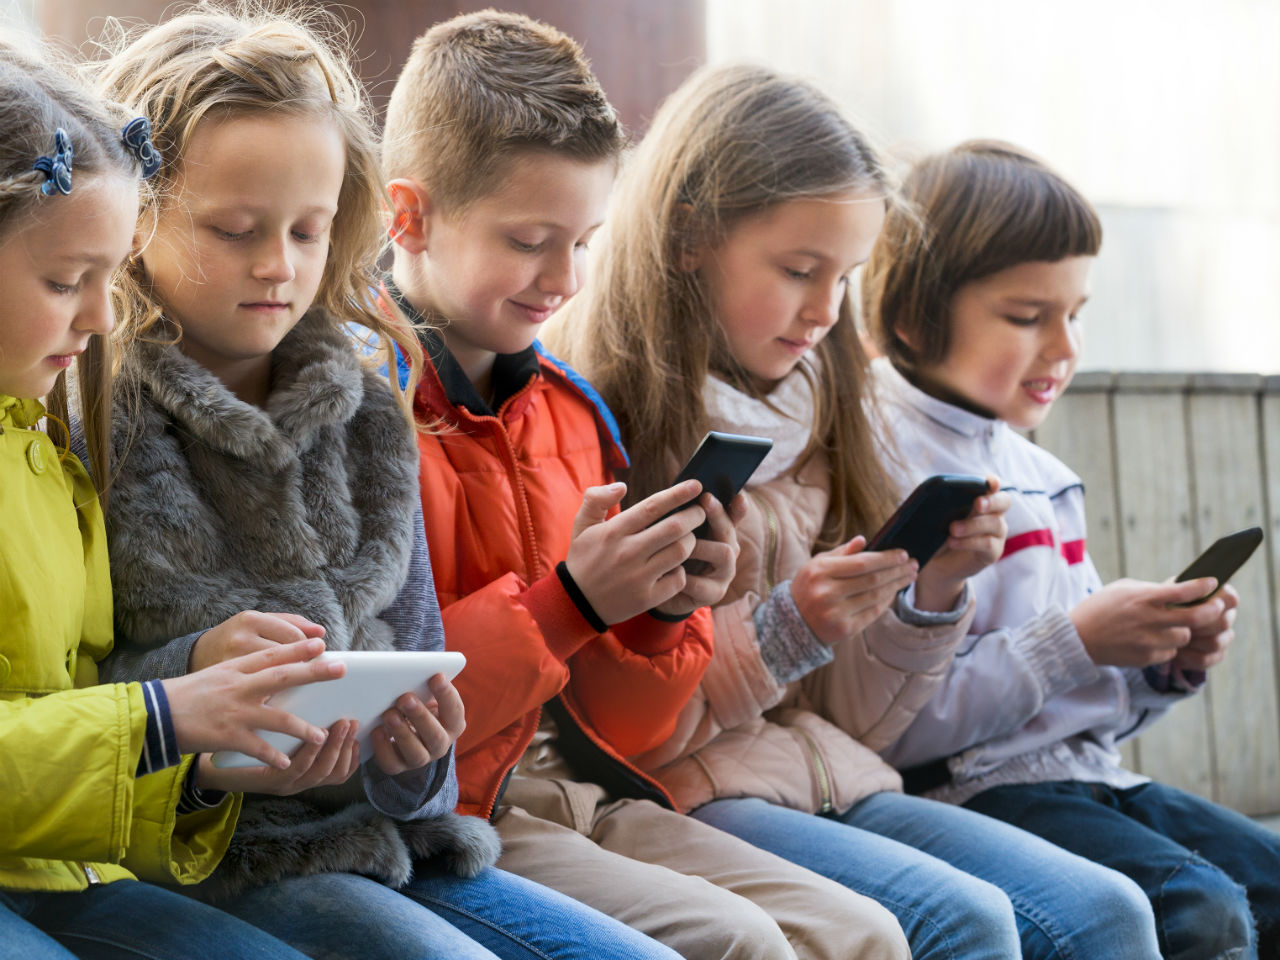 an age by age guide for when your kid should get a smartphone - تنظیمات کنترل های والدین چیست و چطور از آن استفاده کنیم؟